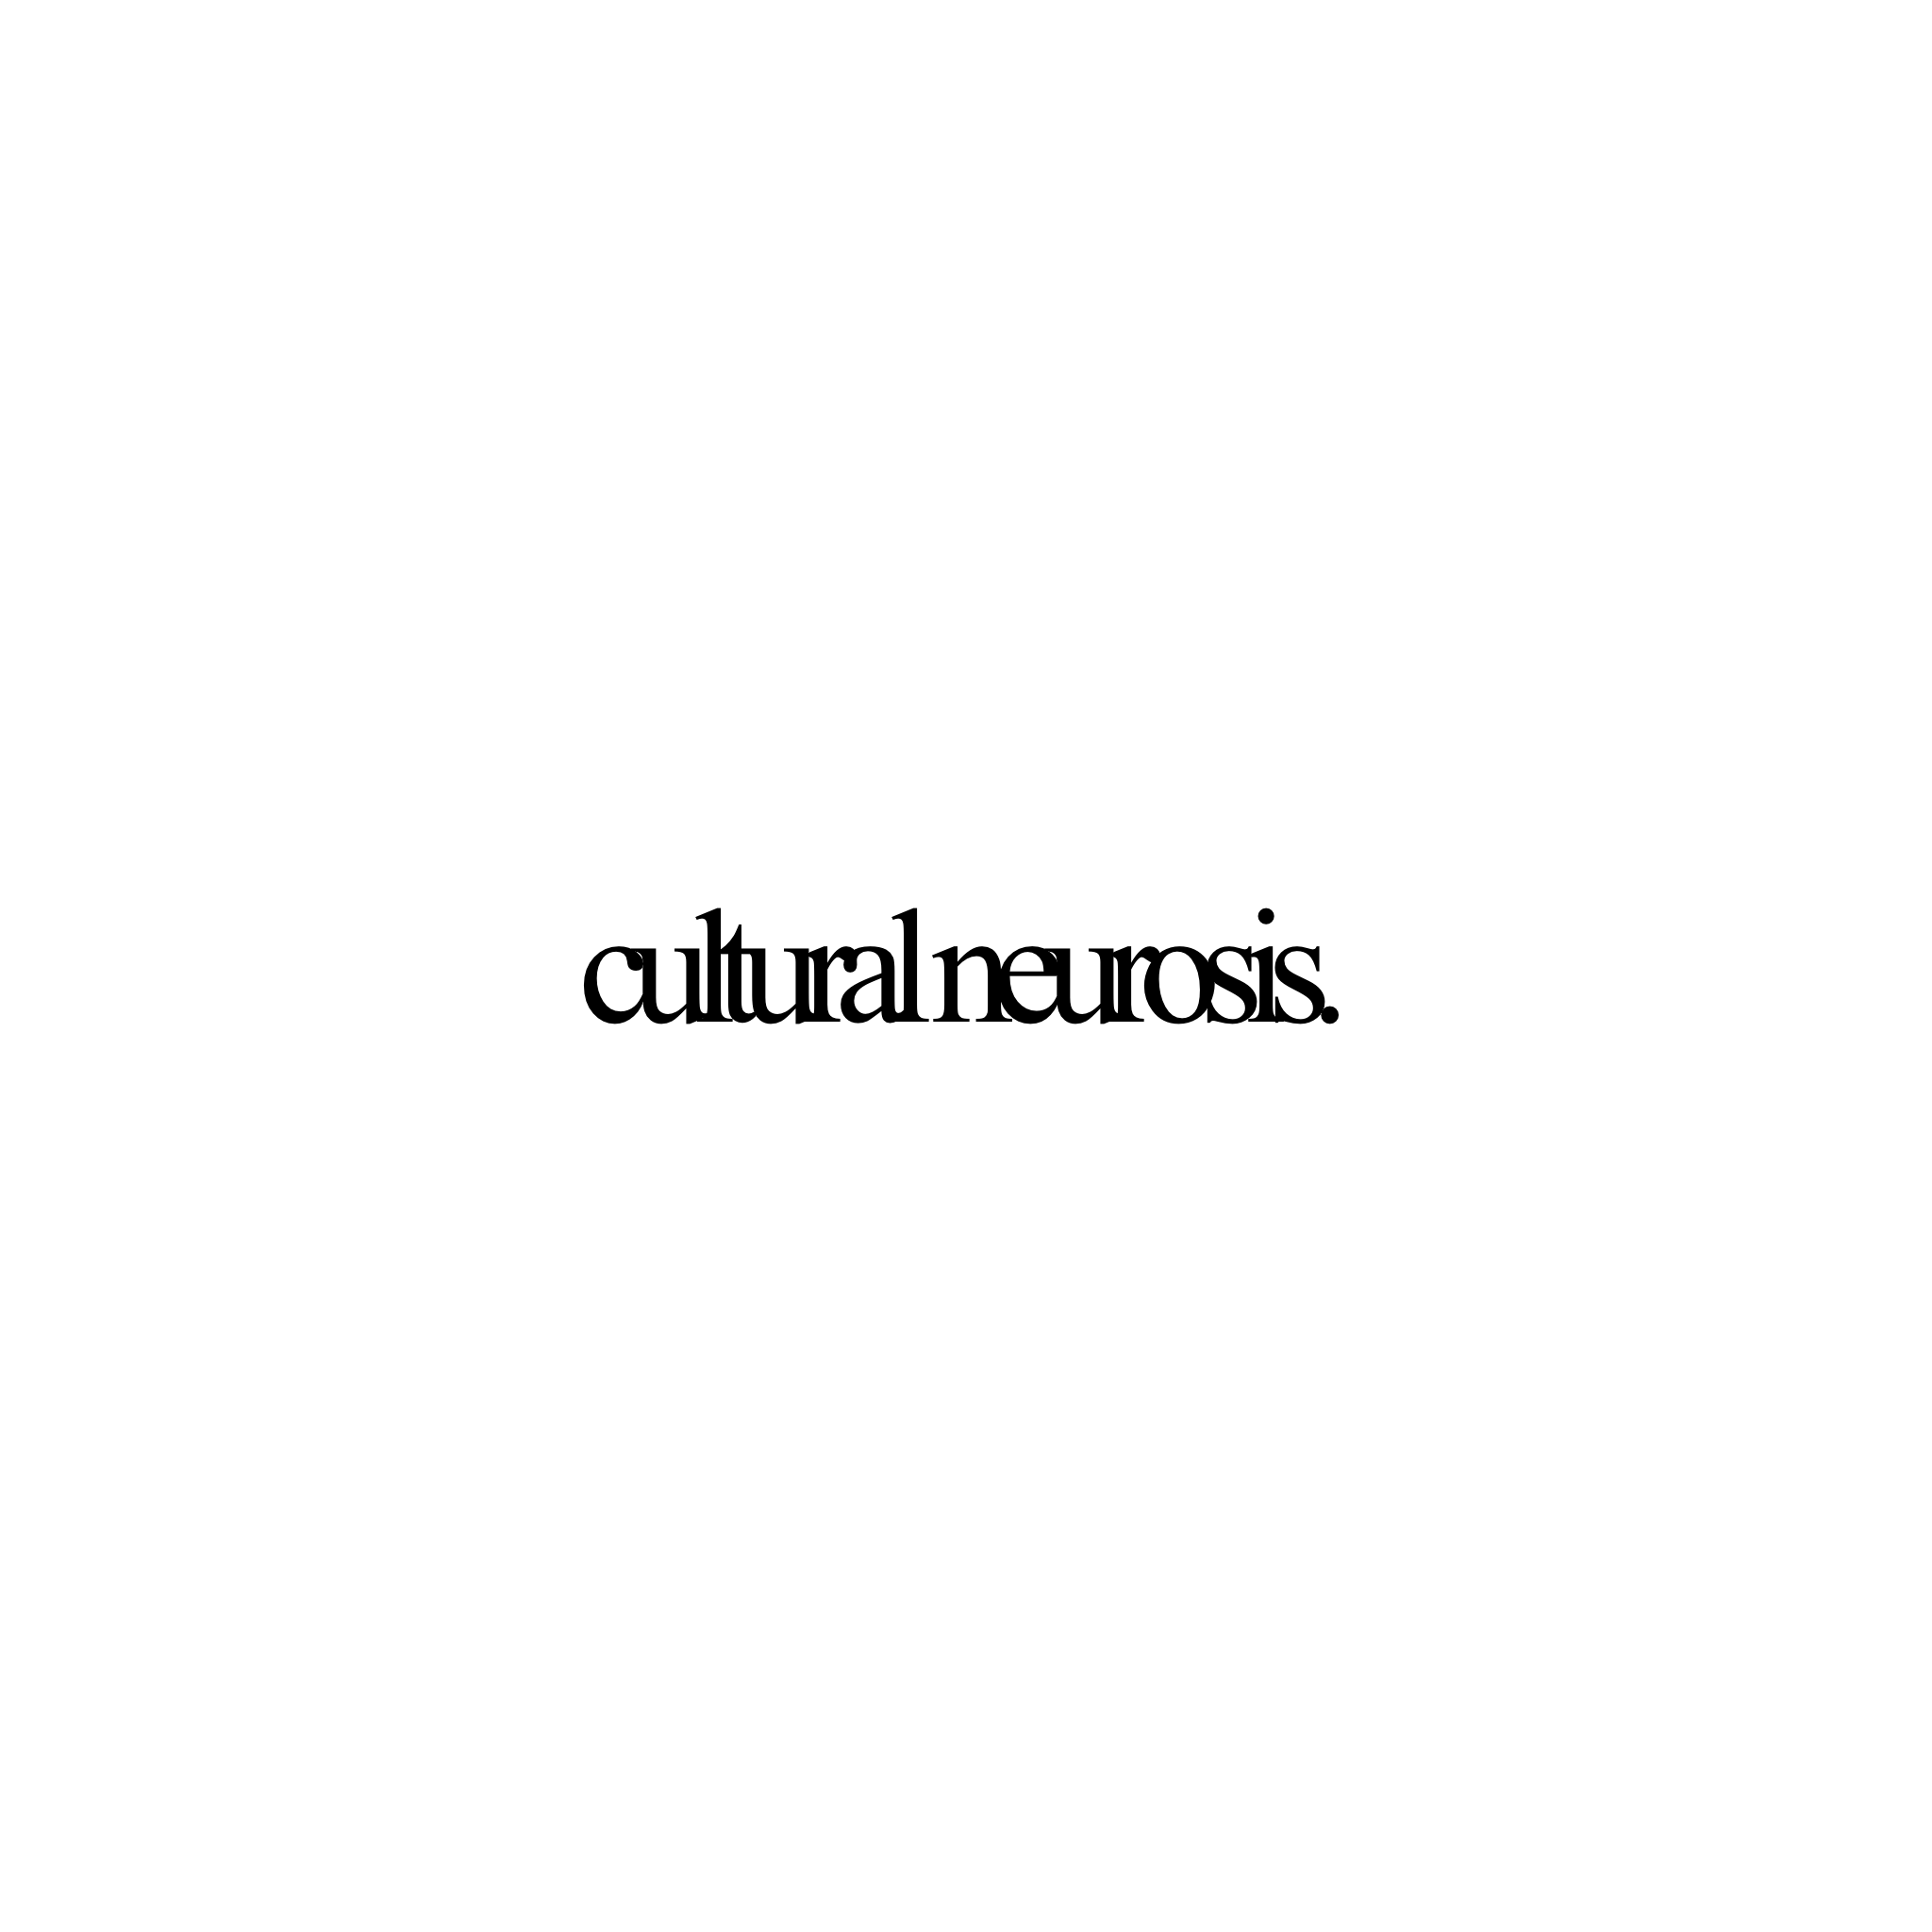 cultural neurosis. thumbnail thumbnail